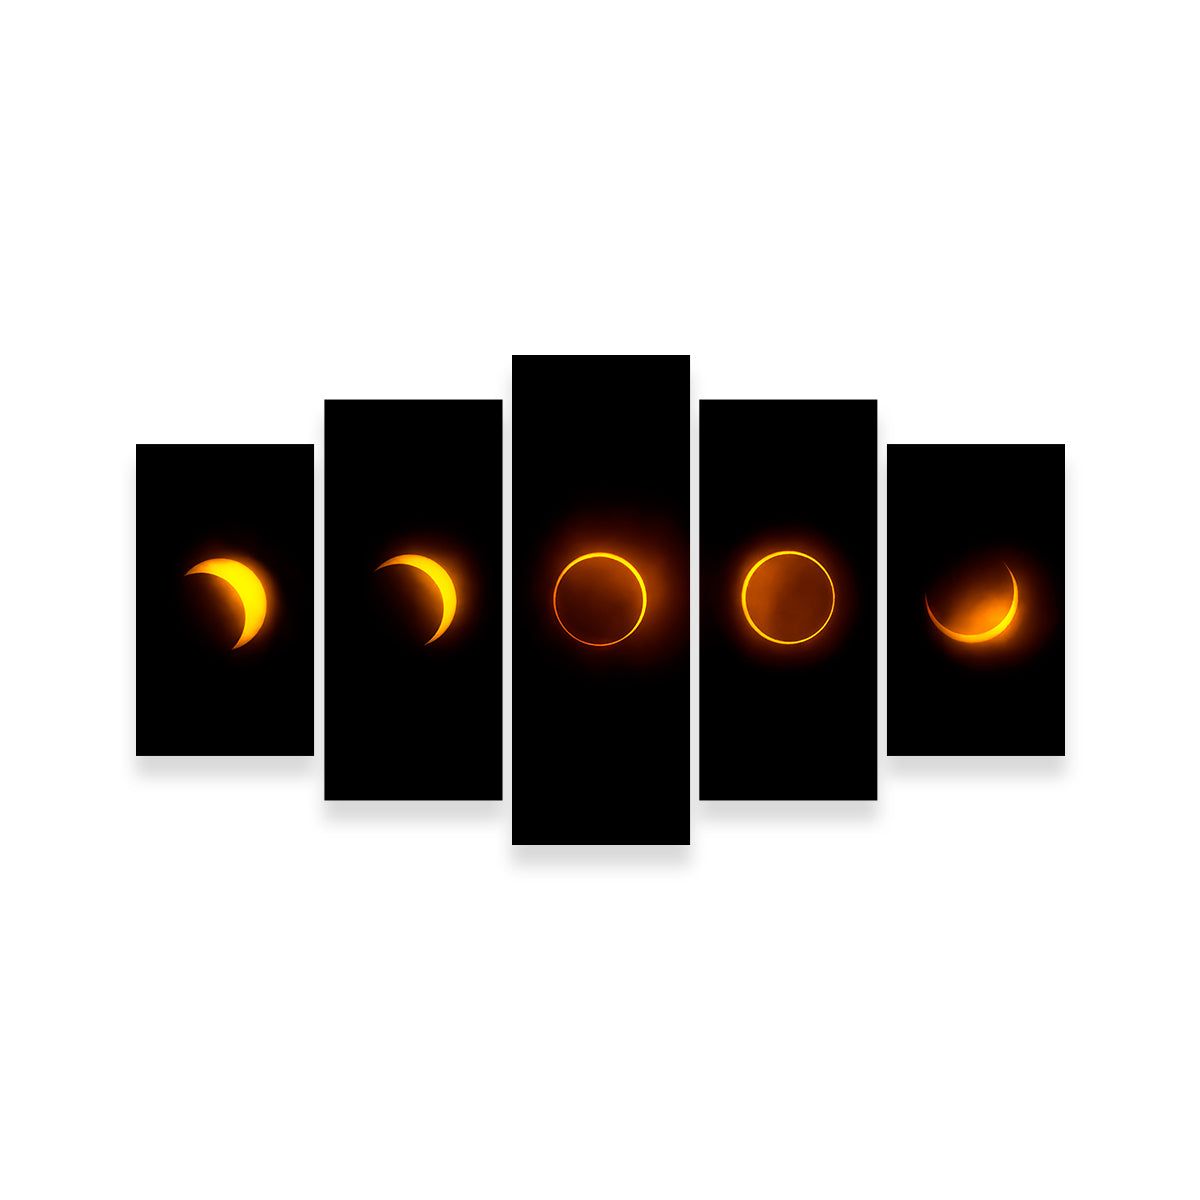 Annular Solar Eclipse - Brazil 2023